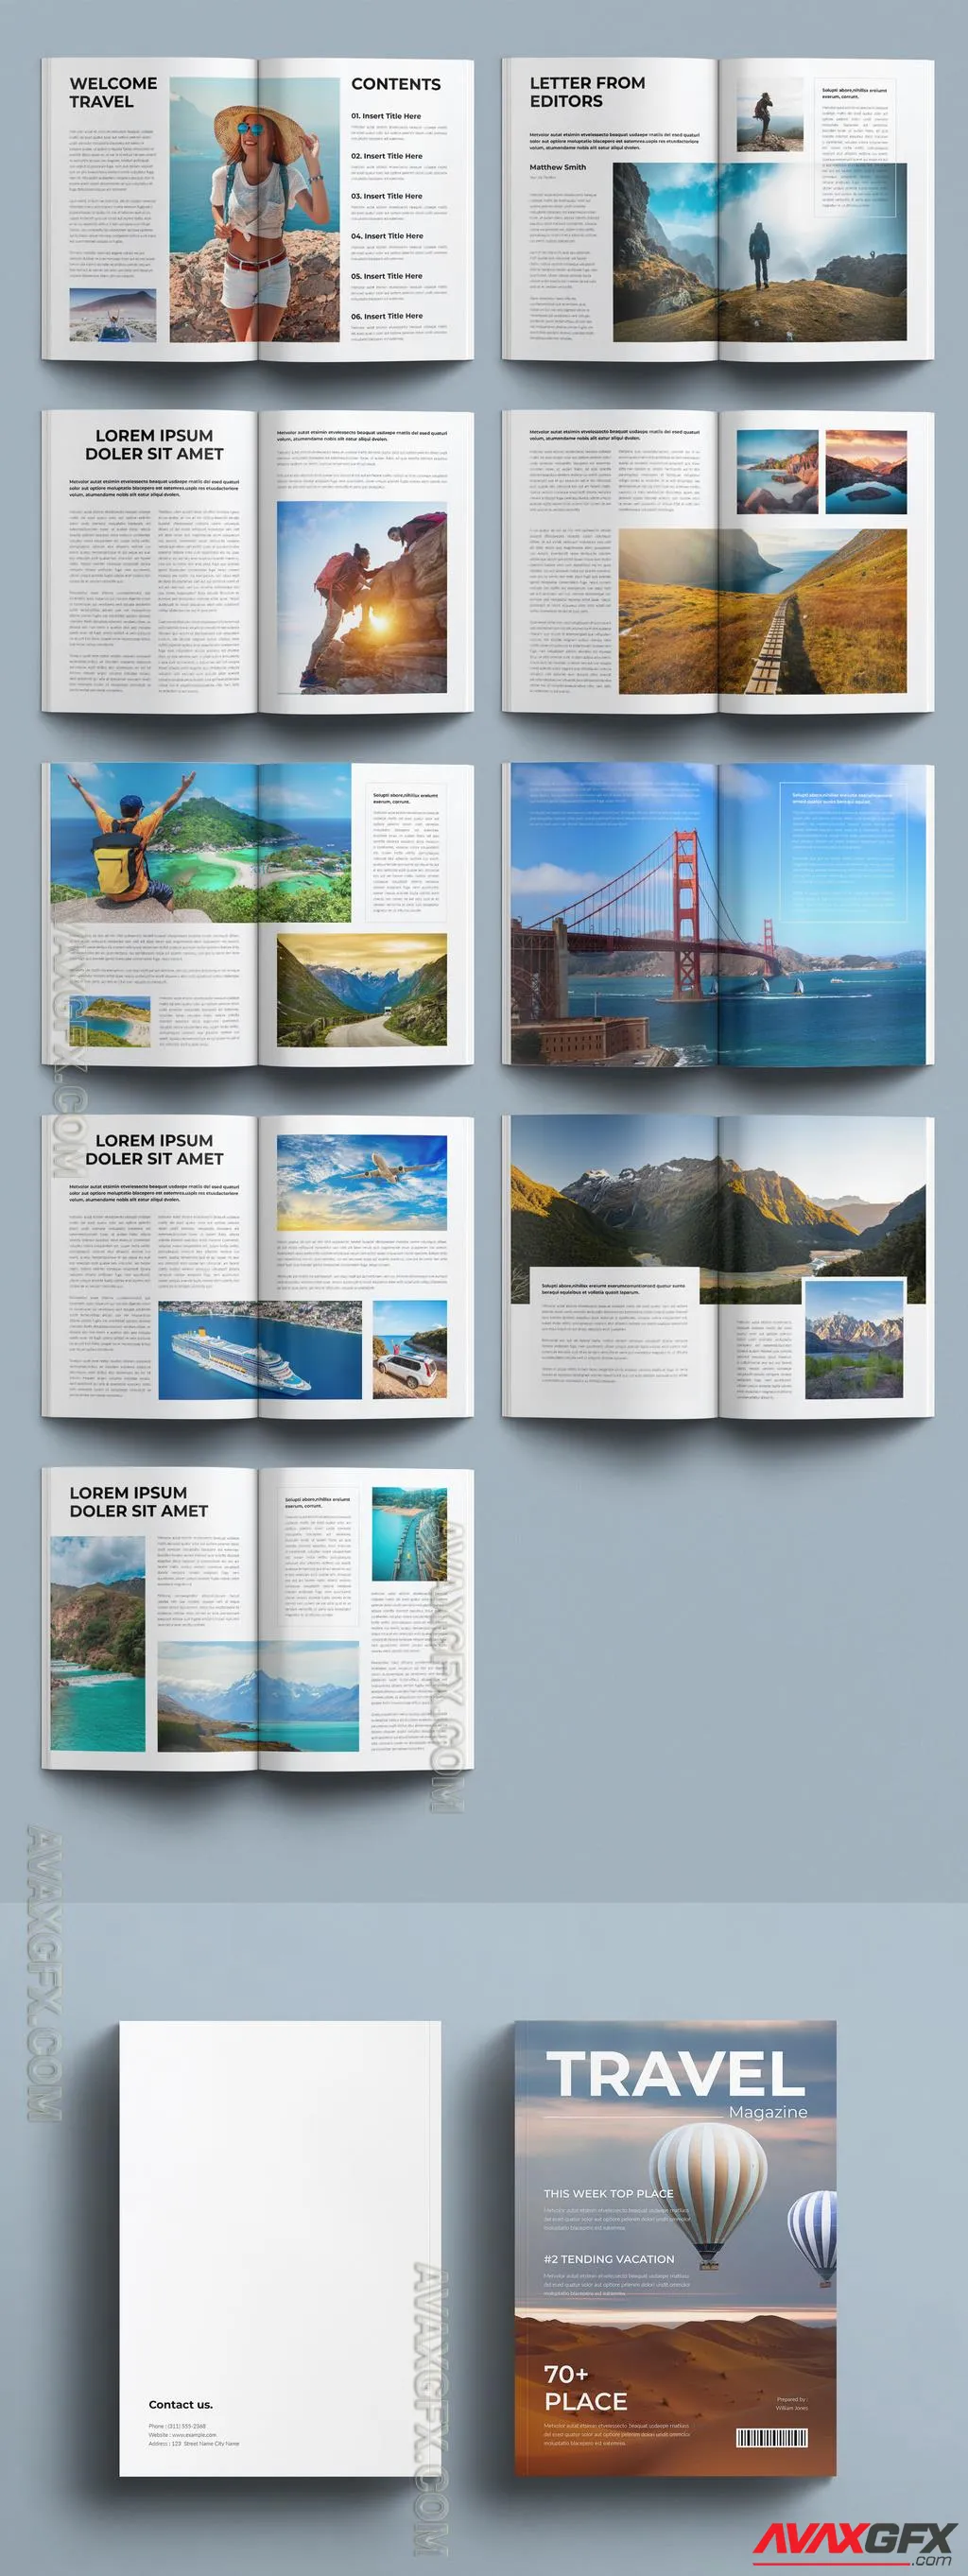 Adobestock - Travel Magazine Template 757180997